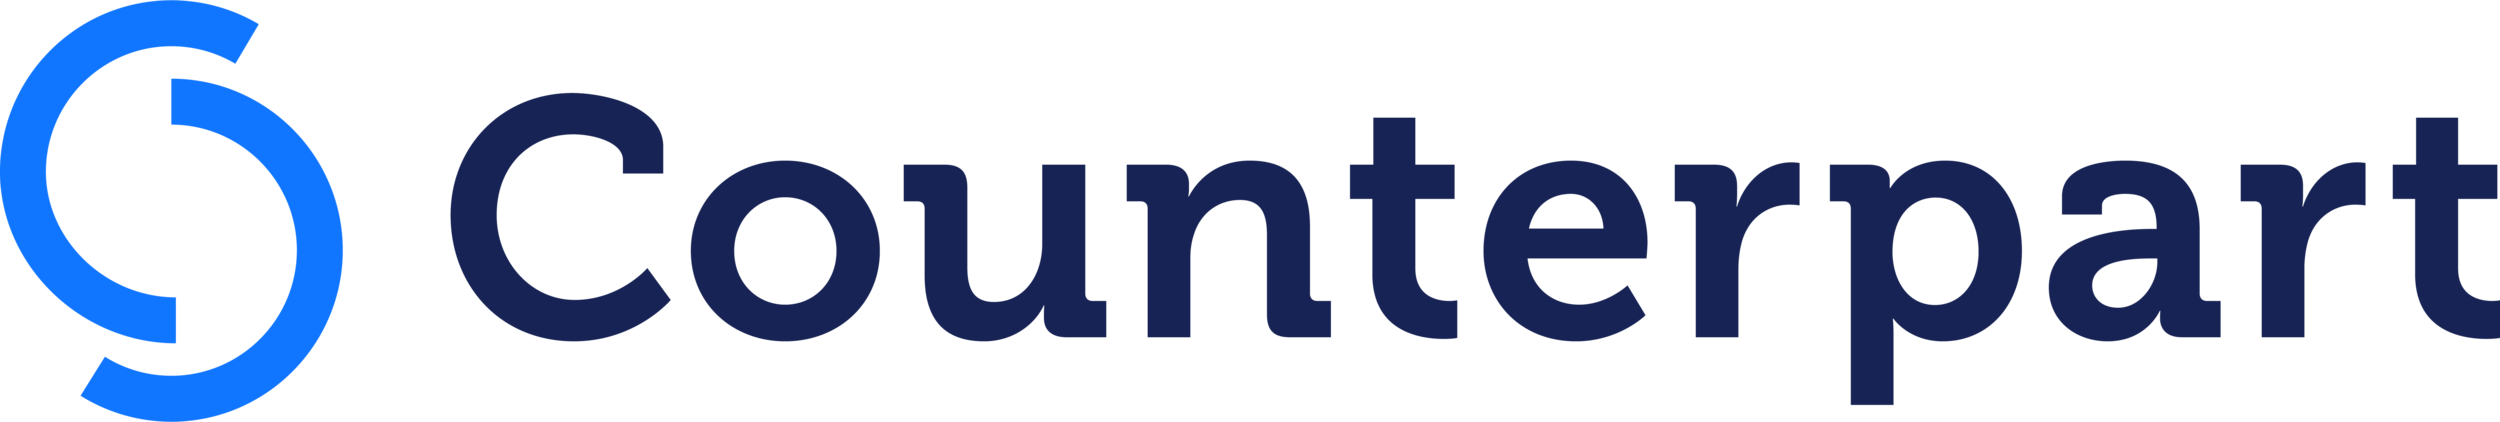 Counterpart Logo.png